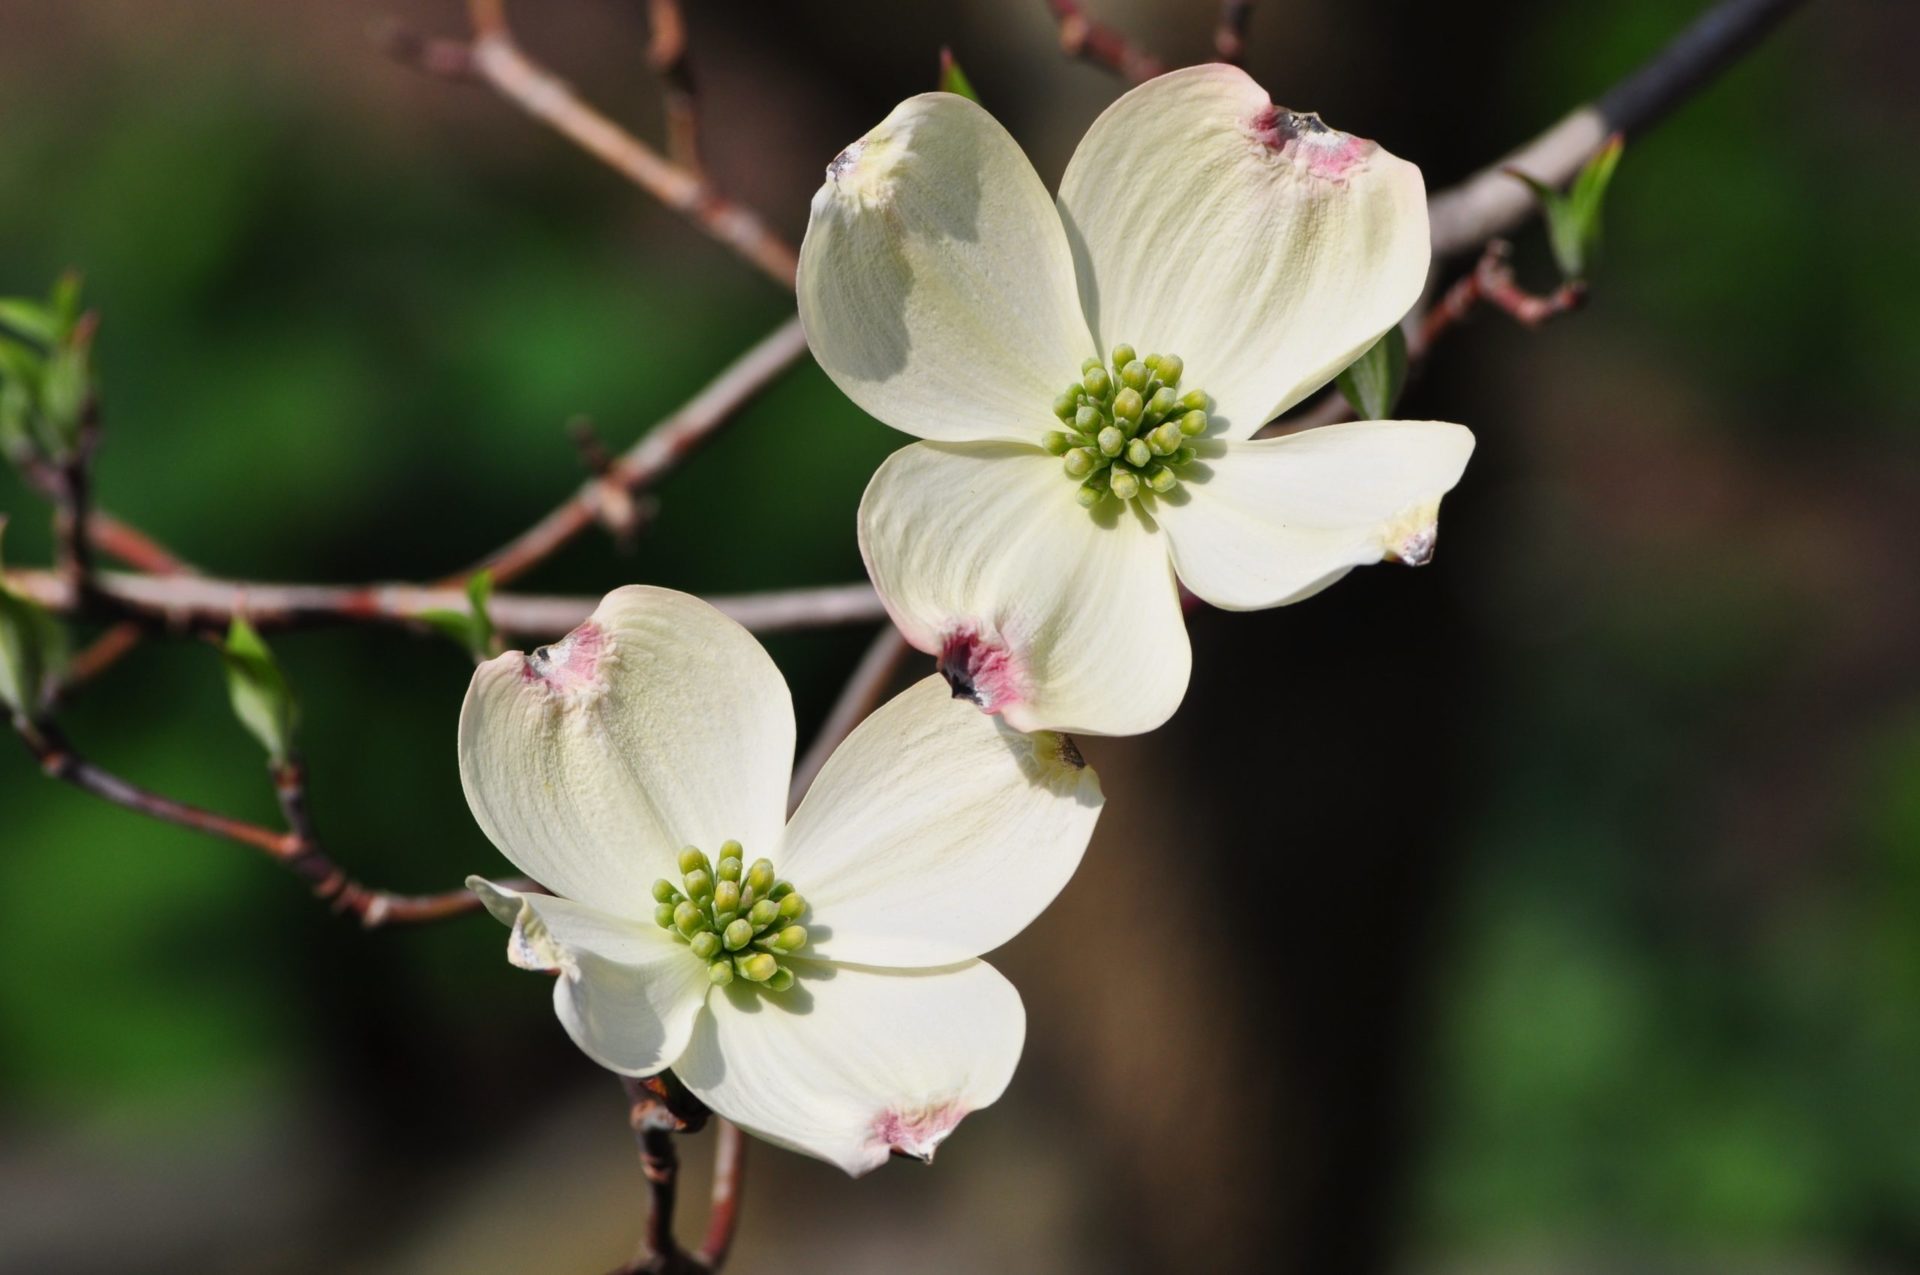 Dogwood Flower Meaning: Love Undiminished by Adversity